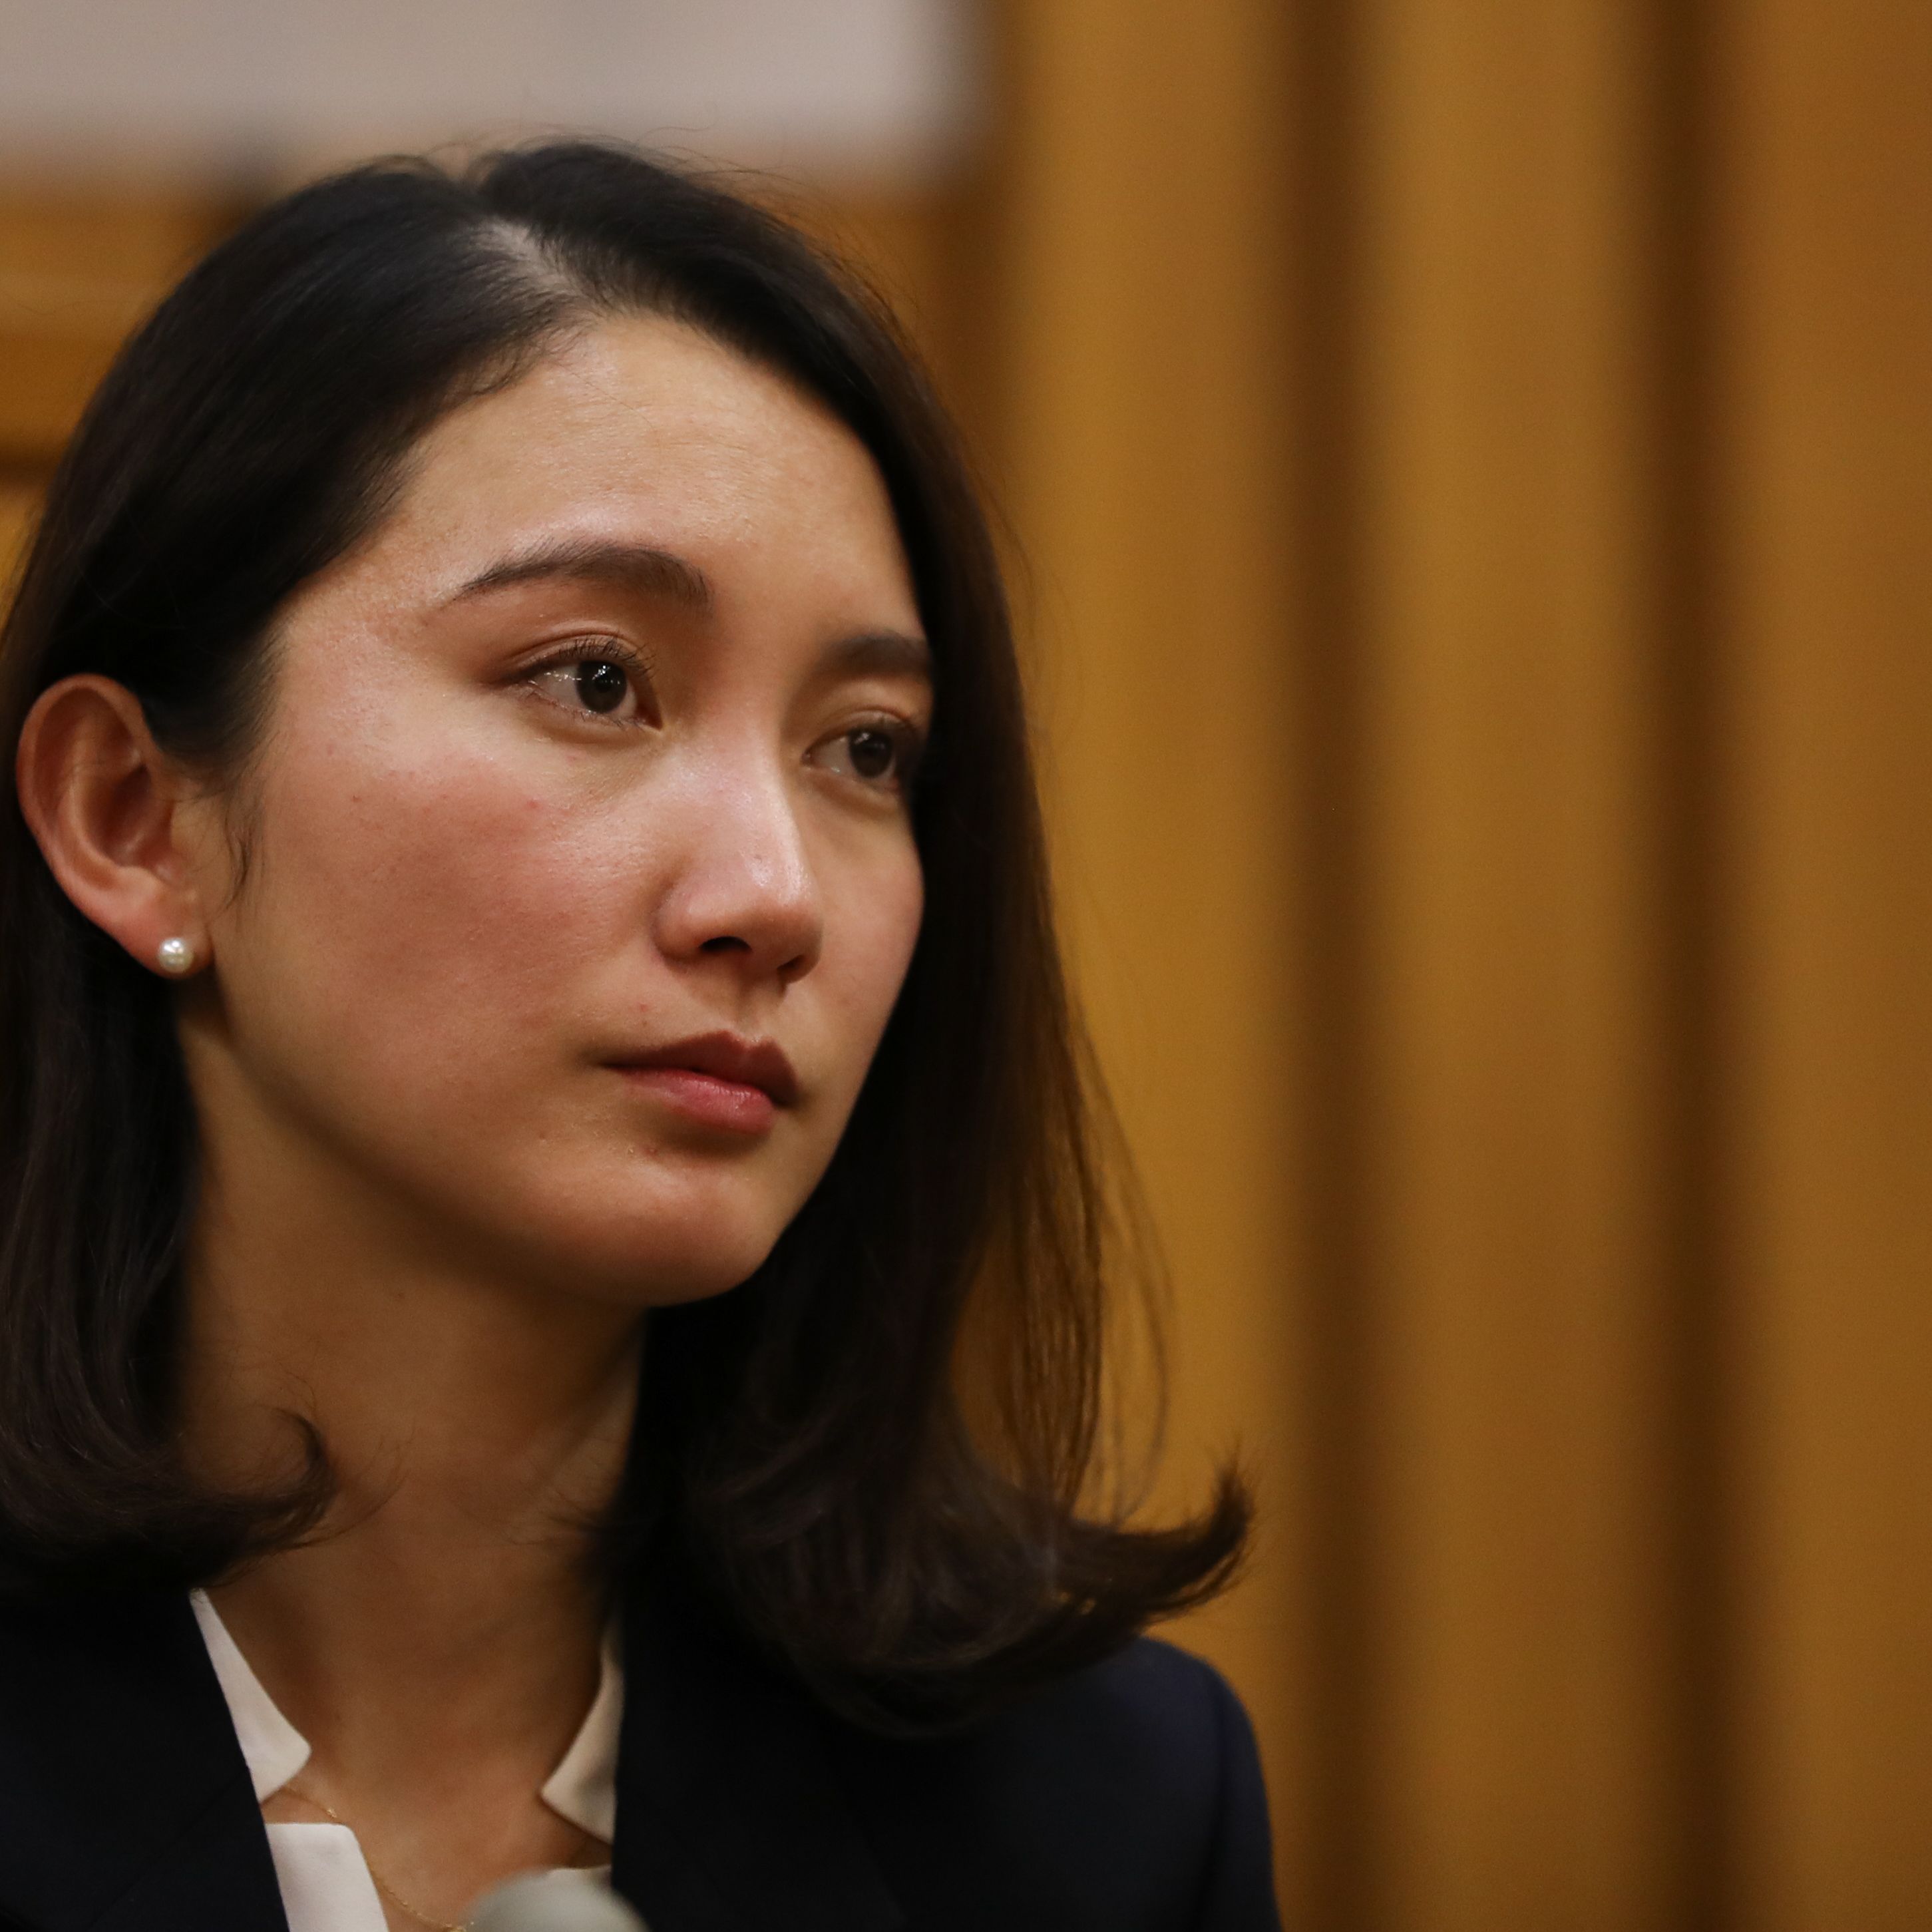 Oceana Jabardasti Balatkar Sex - Shiori Ito won civil case against her alleged rapist. But Japan's rape laws  need overhaul, campaigners say | CNN